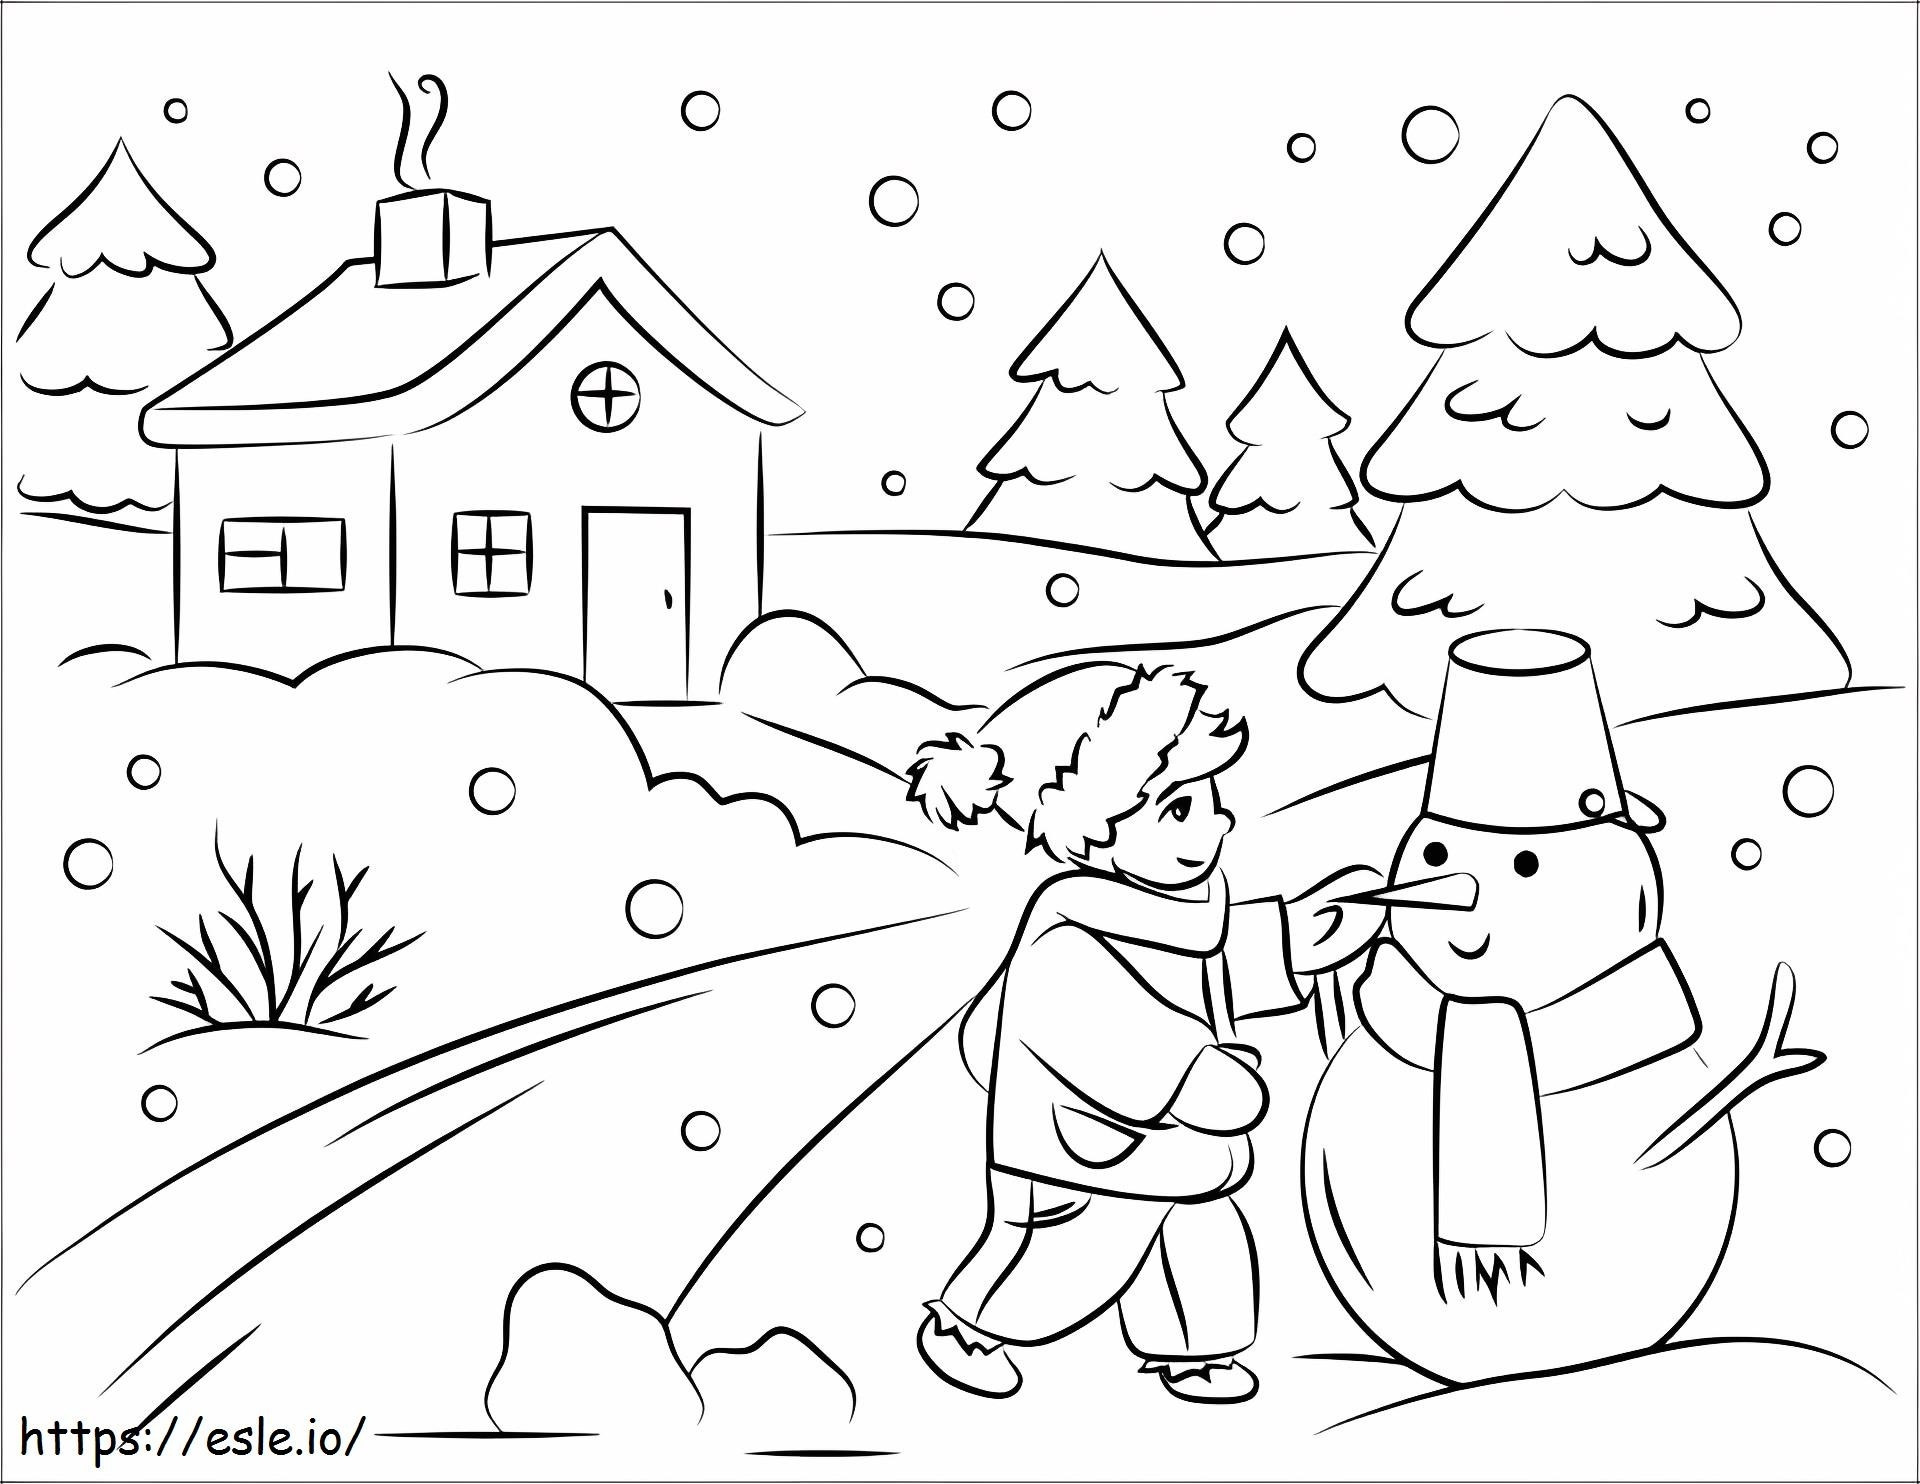 Child Building Snowman coloring page